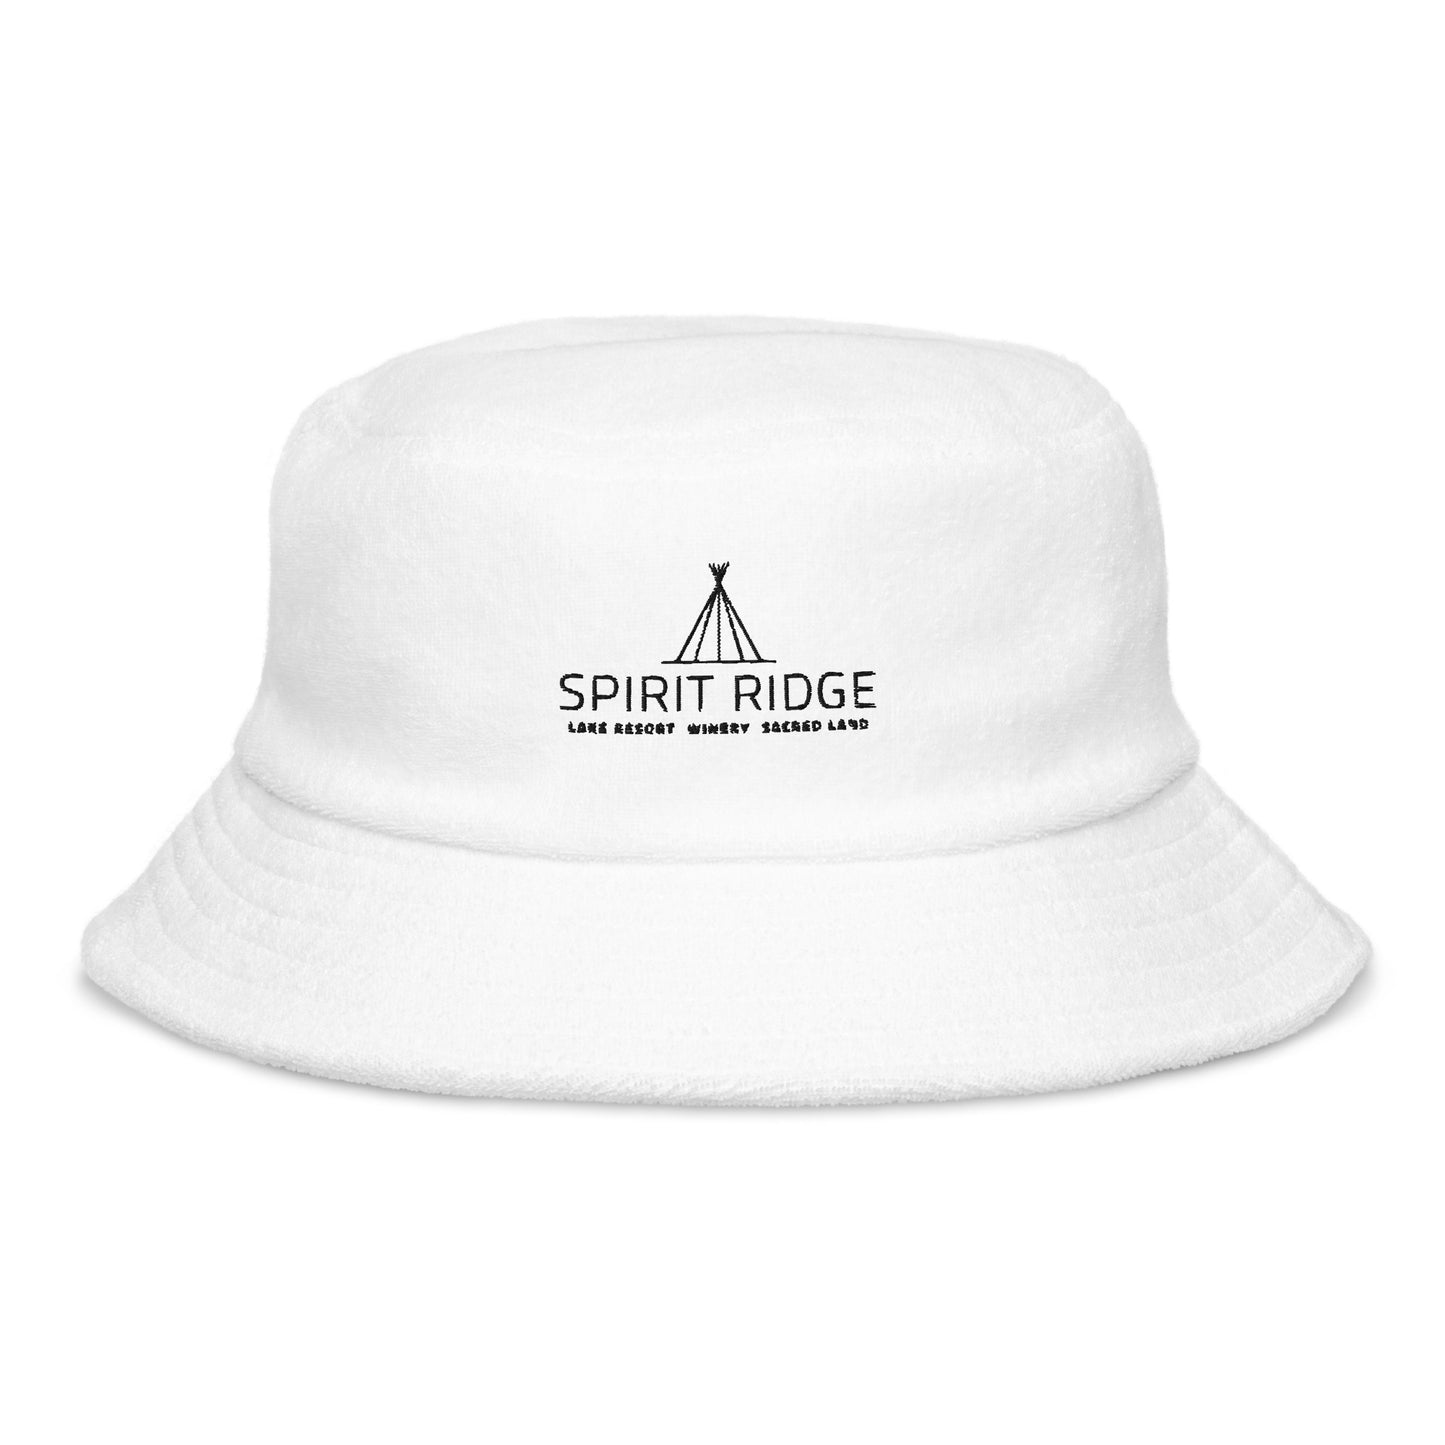 Spirit Ridge Resort terry cloth bucket hat